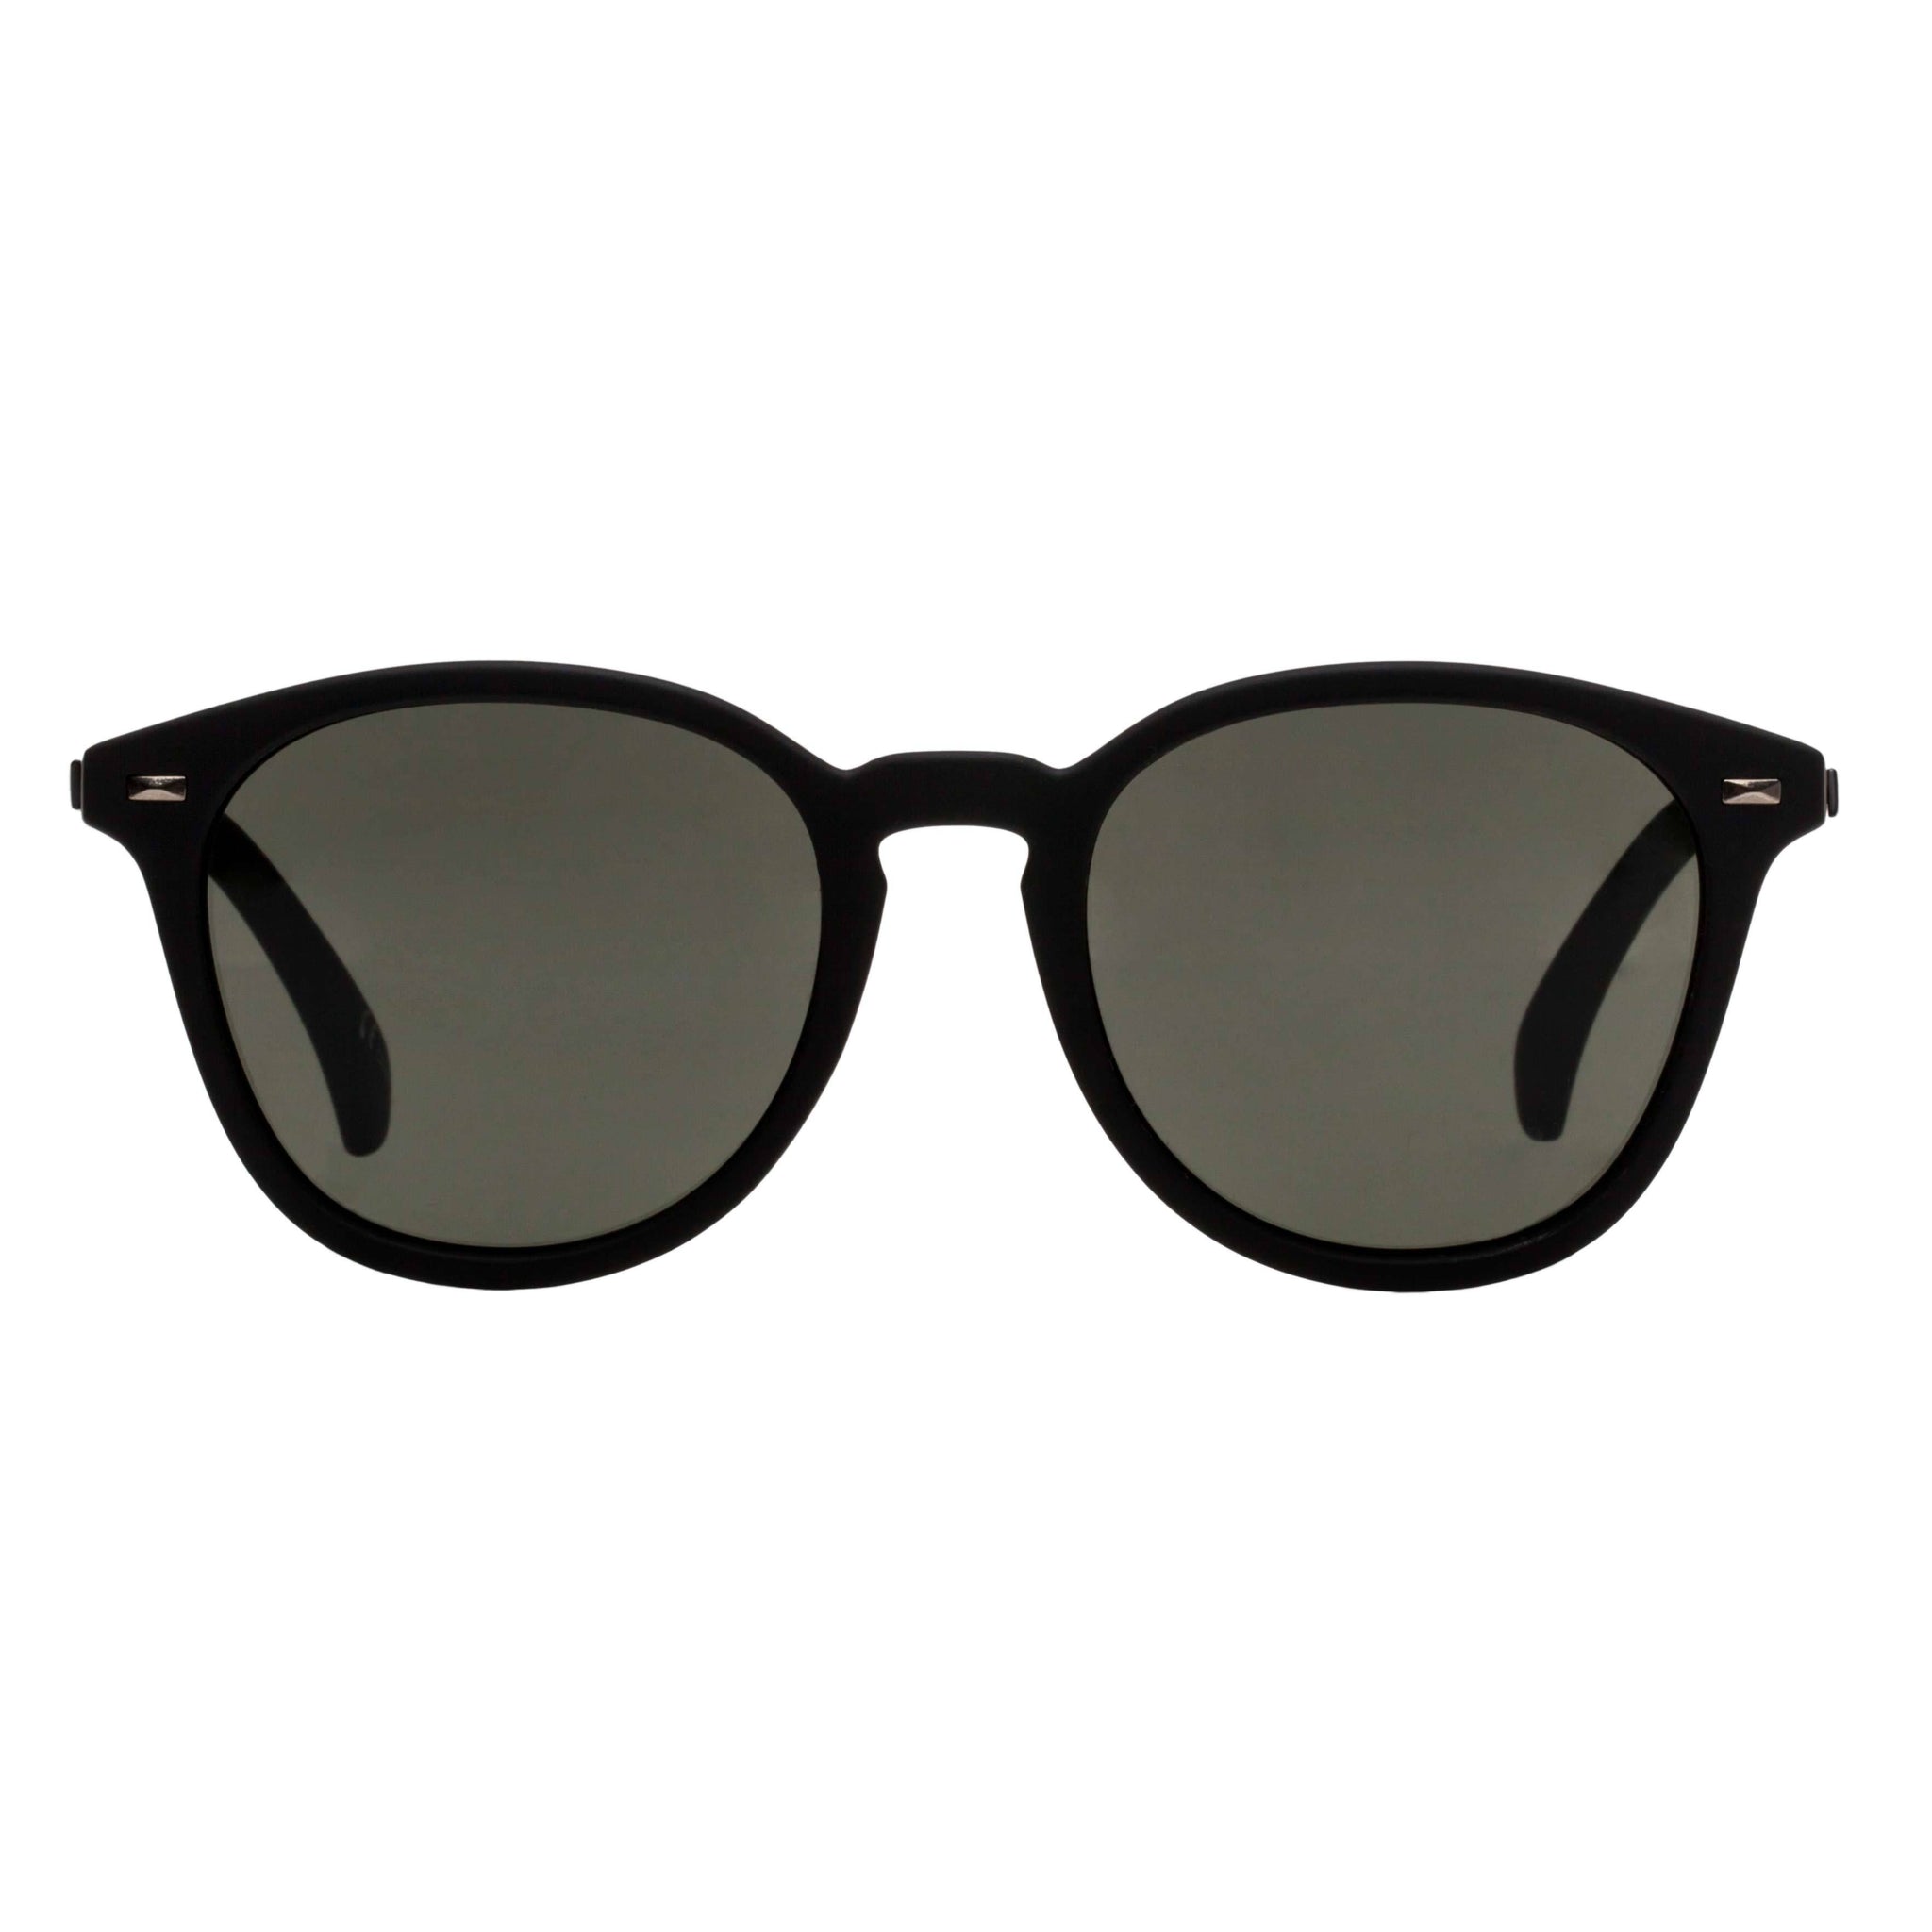 Bandwagon Black Rubber Uni-Sex Round Sunglasses | Le Specs